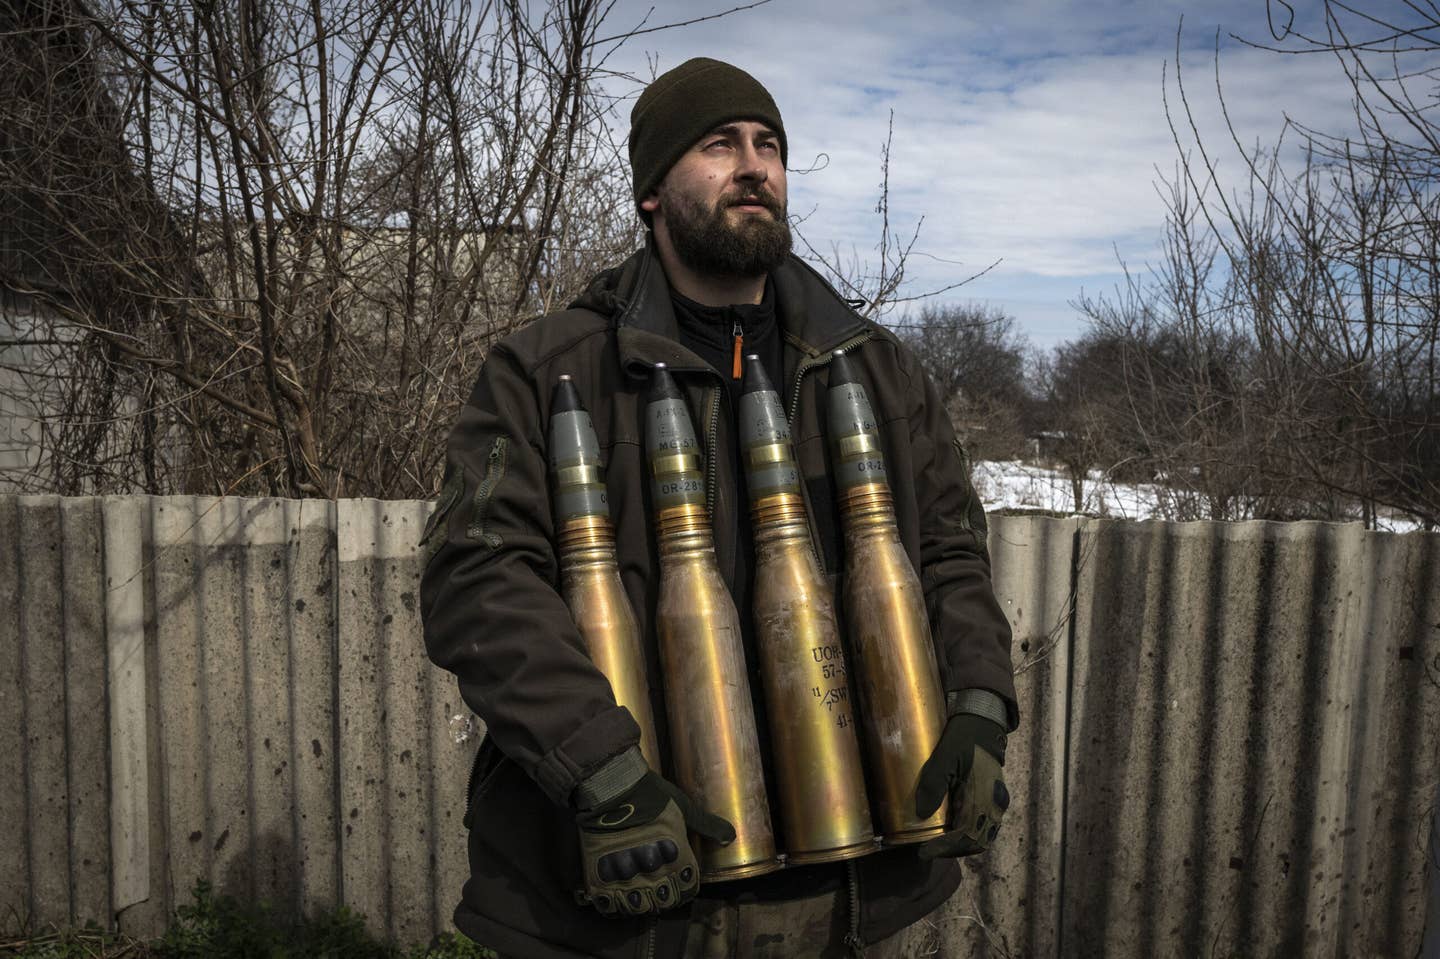 A Ukrainian soldier holds artillery ammunition near the frontline area amid the Russia-Ukraine war, in Bakhmut, Ukraine on April 2, 2023. <em>Photo by Muhammed Enes Yildirim/Anadolu Agency via Getty Images</em>